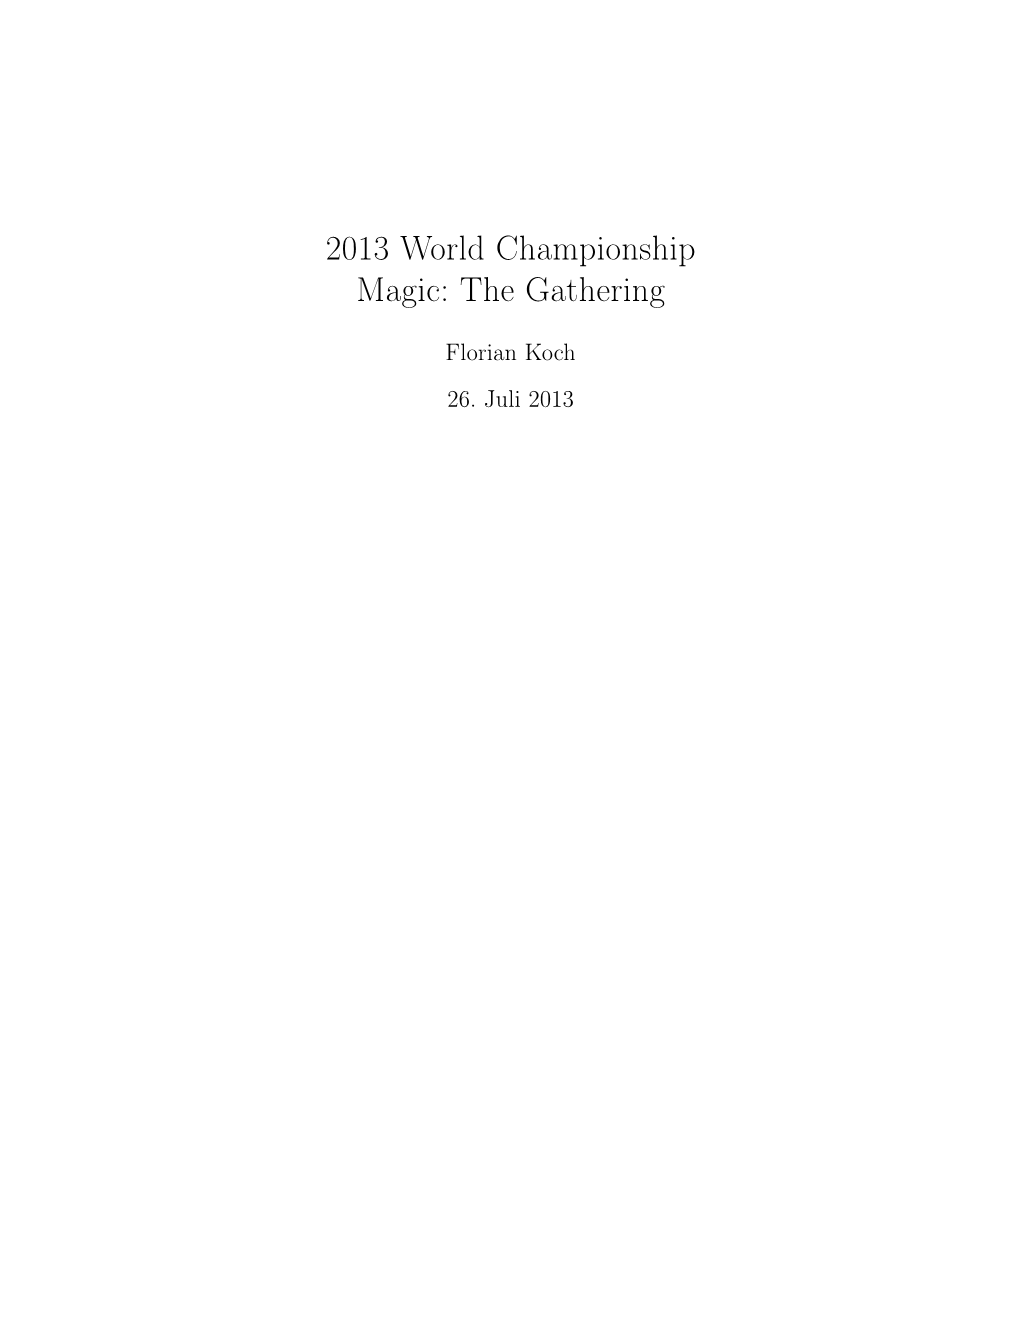 2013 World Championship Magic: the Gathering